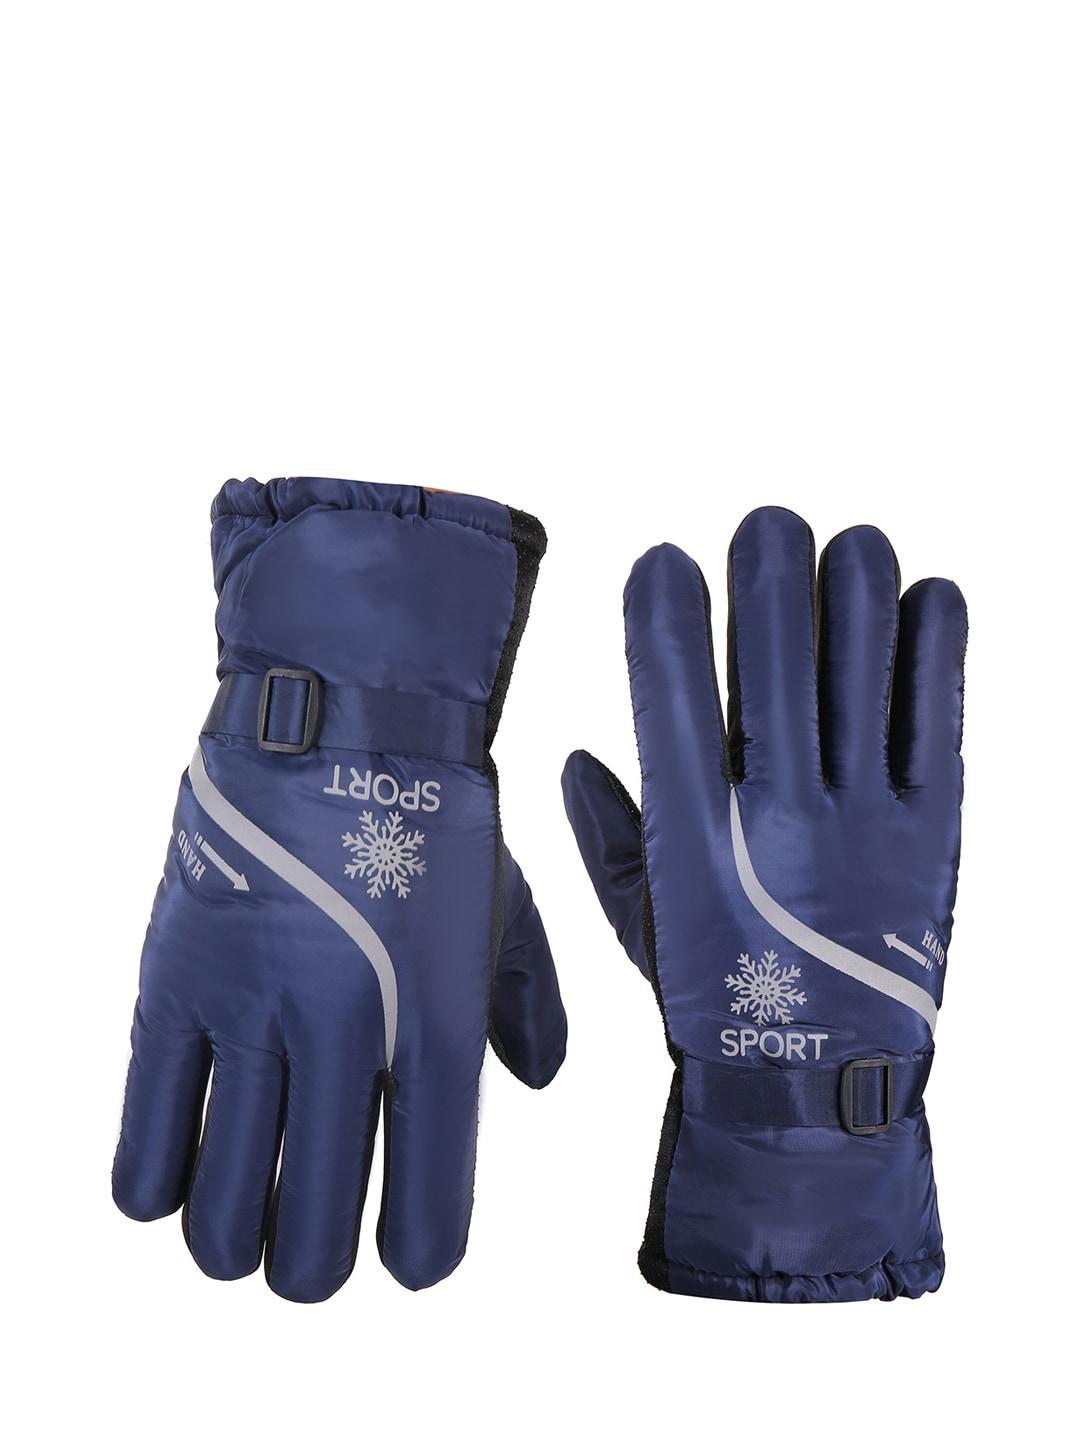 alexvyan men warm winter protective gloves